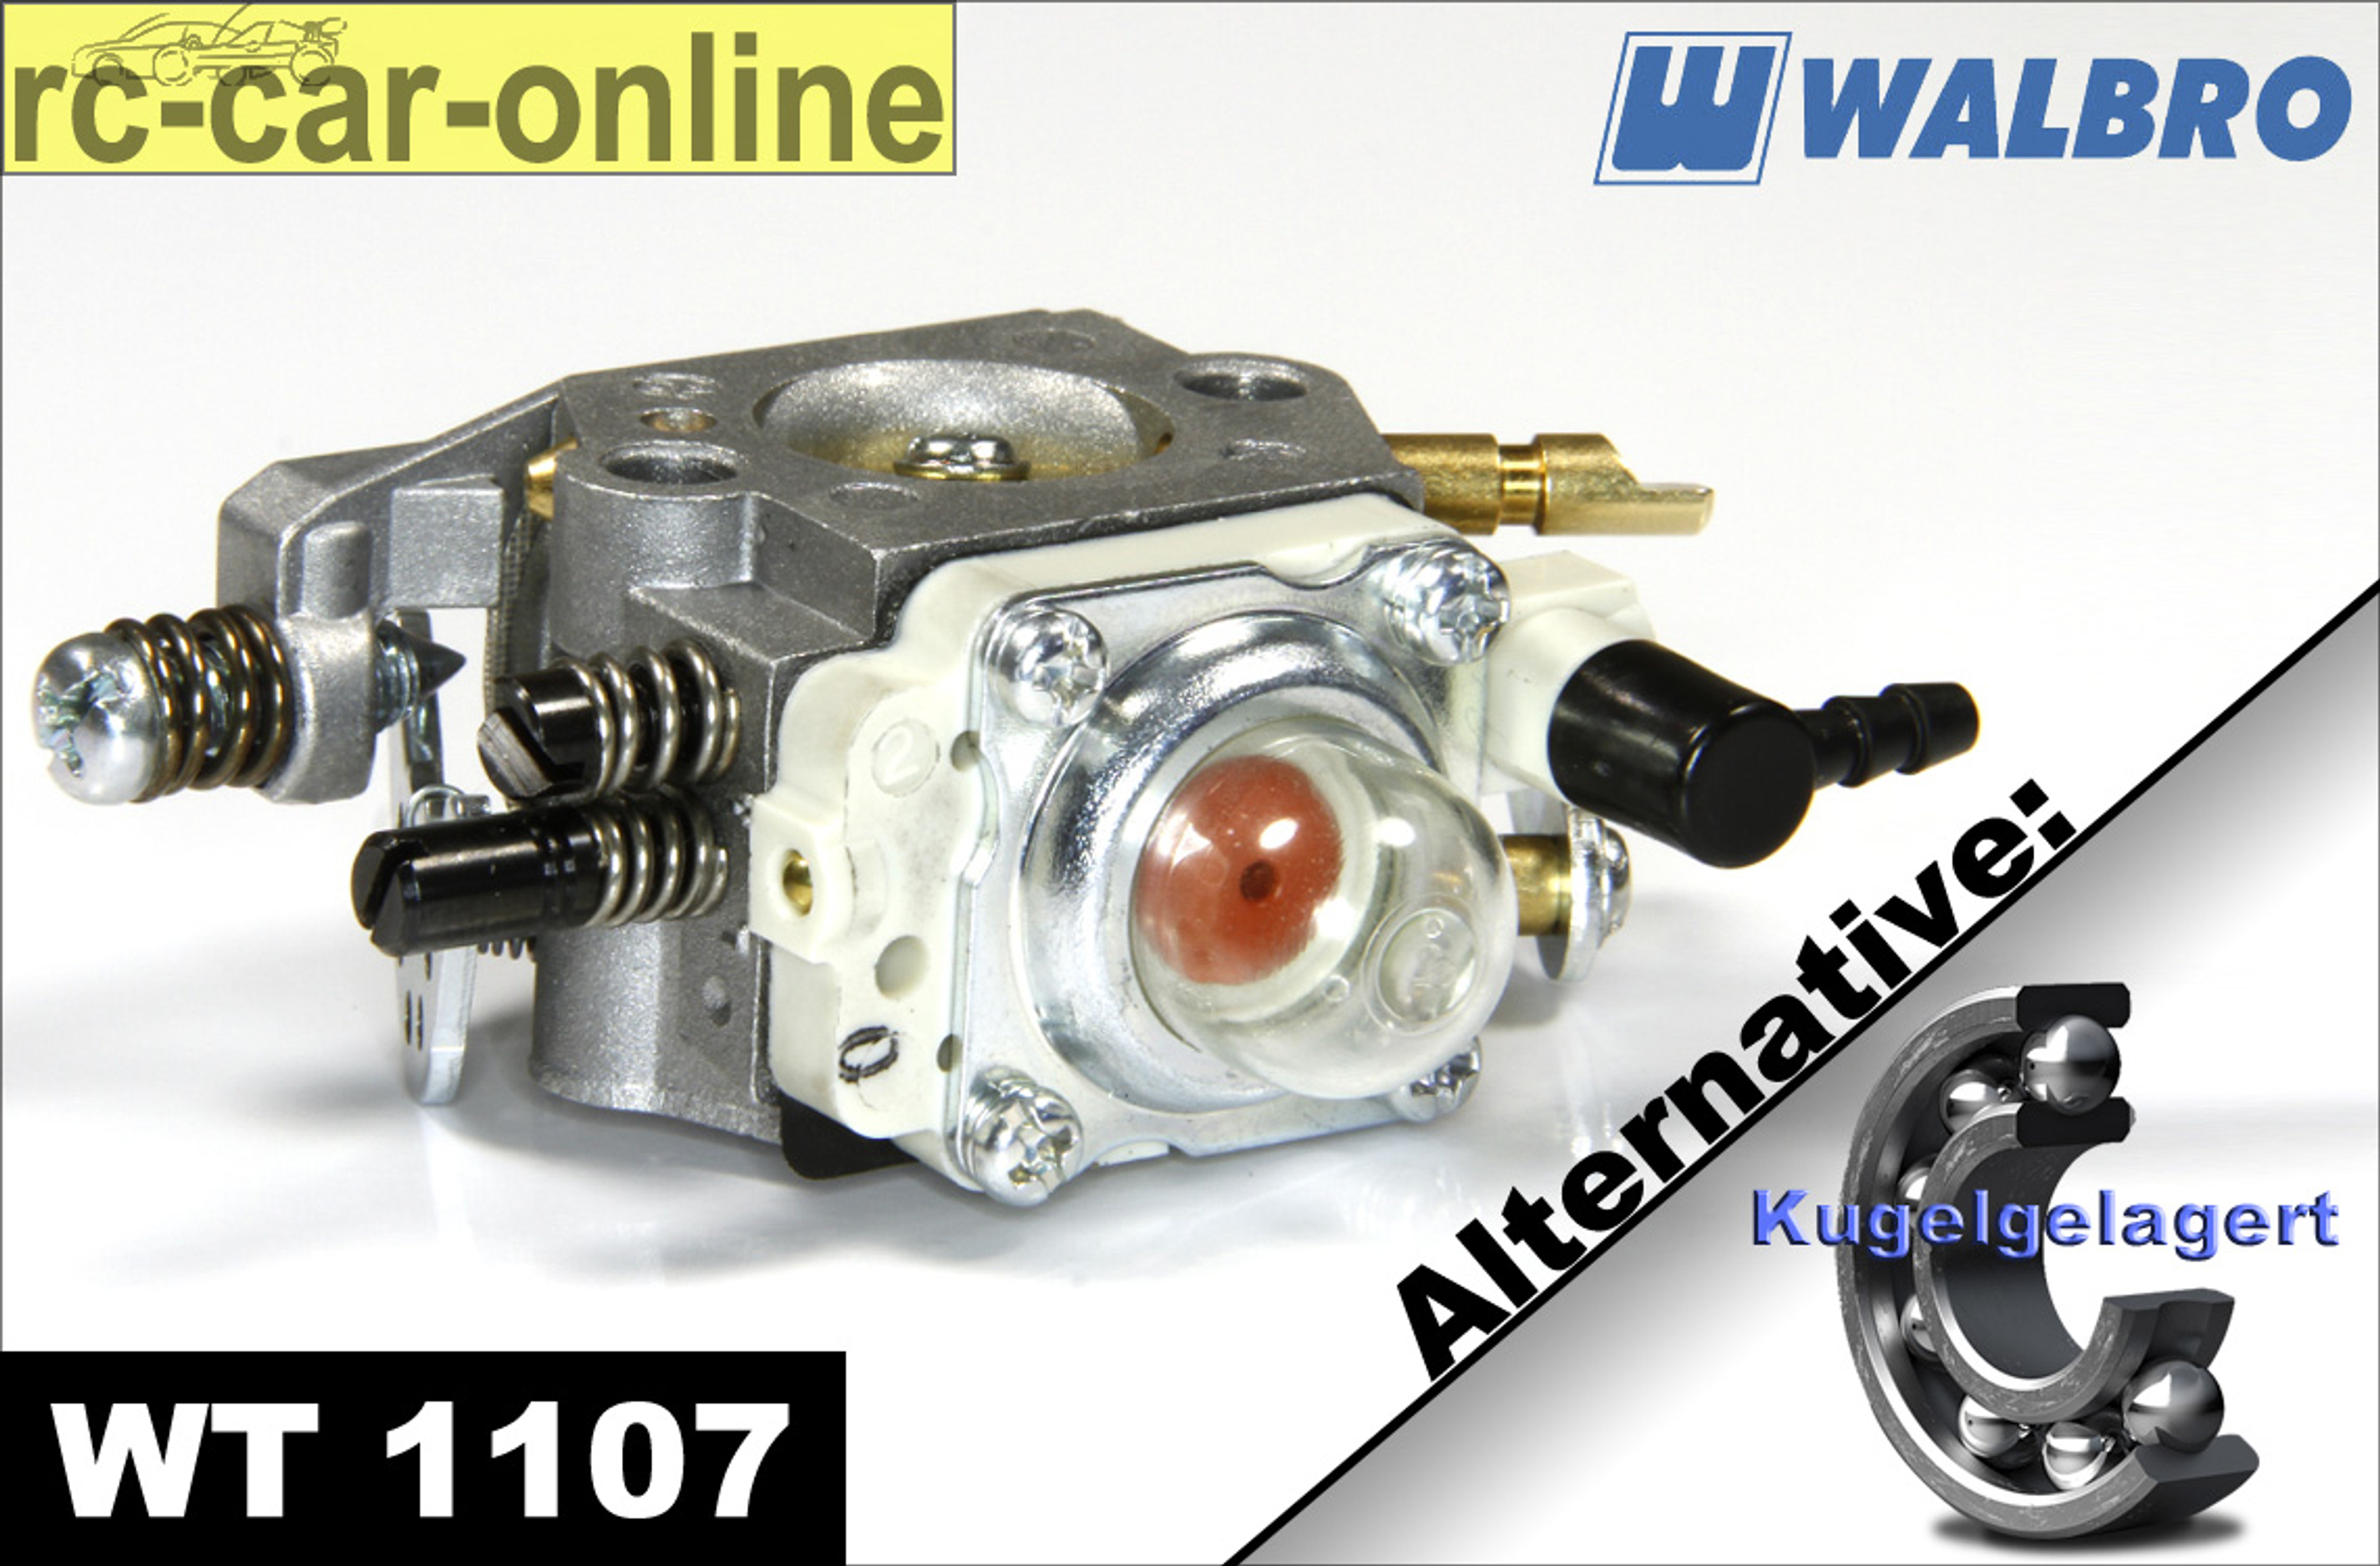 Walbro Vergaser WT 1107 mit Choke normal/kugelgelagert